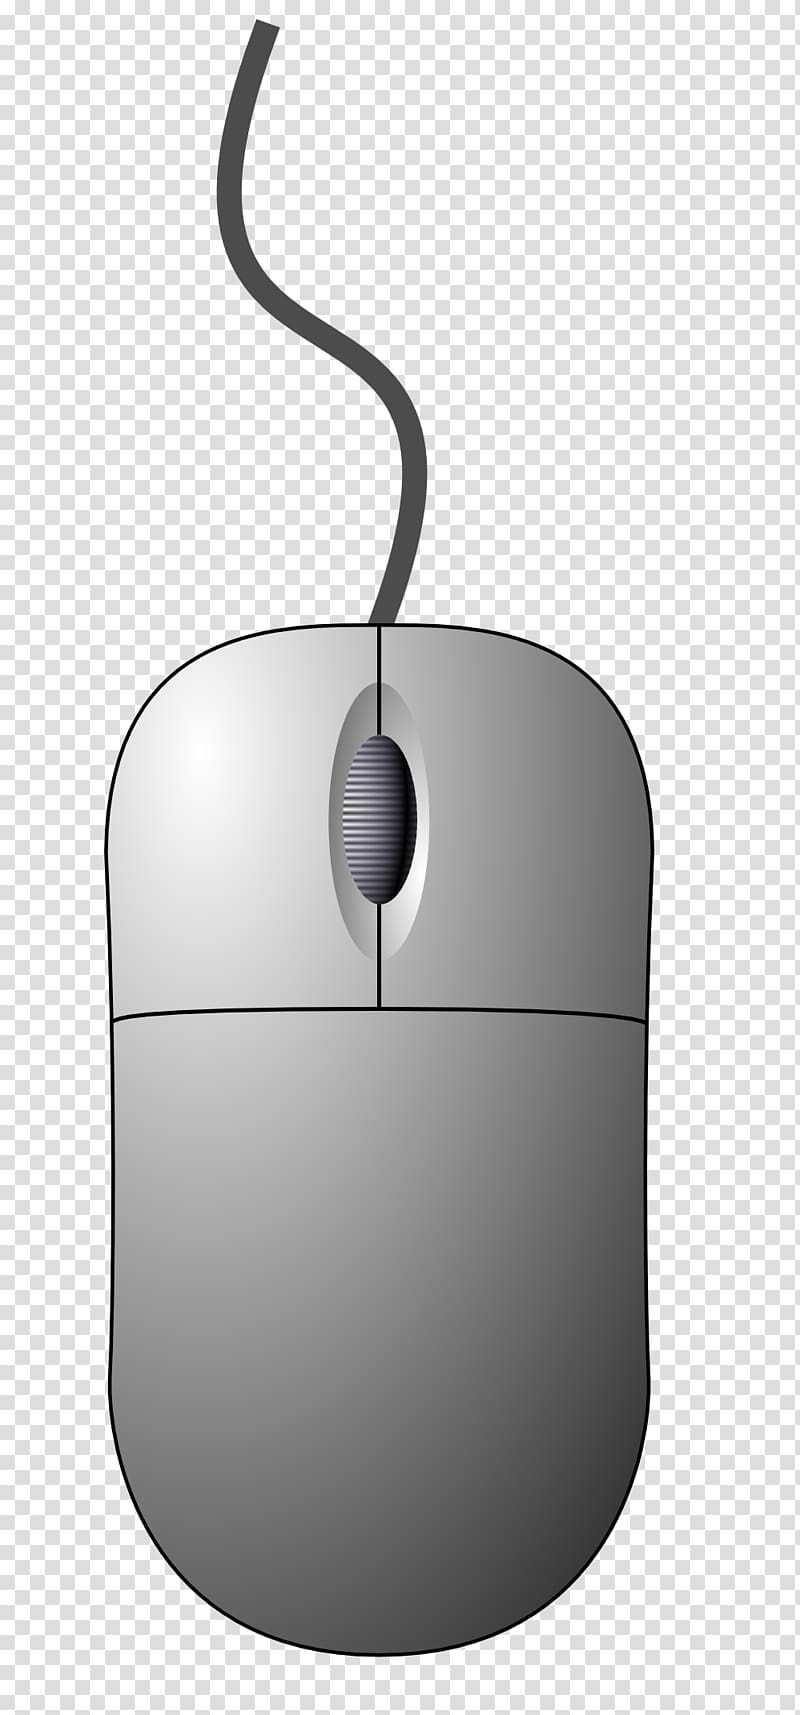 PC mouse transparent background PNG clipart